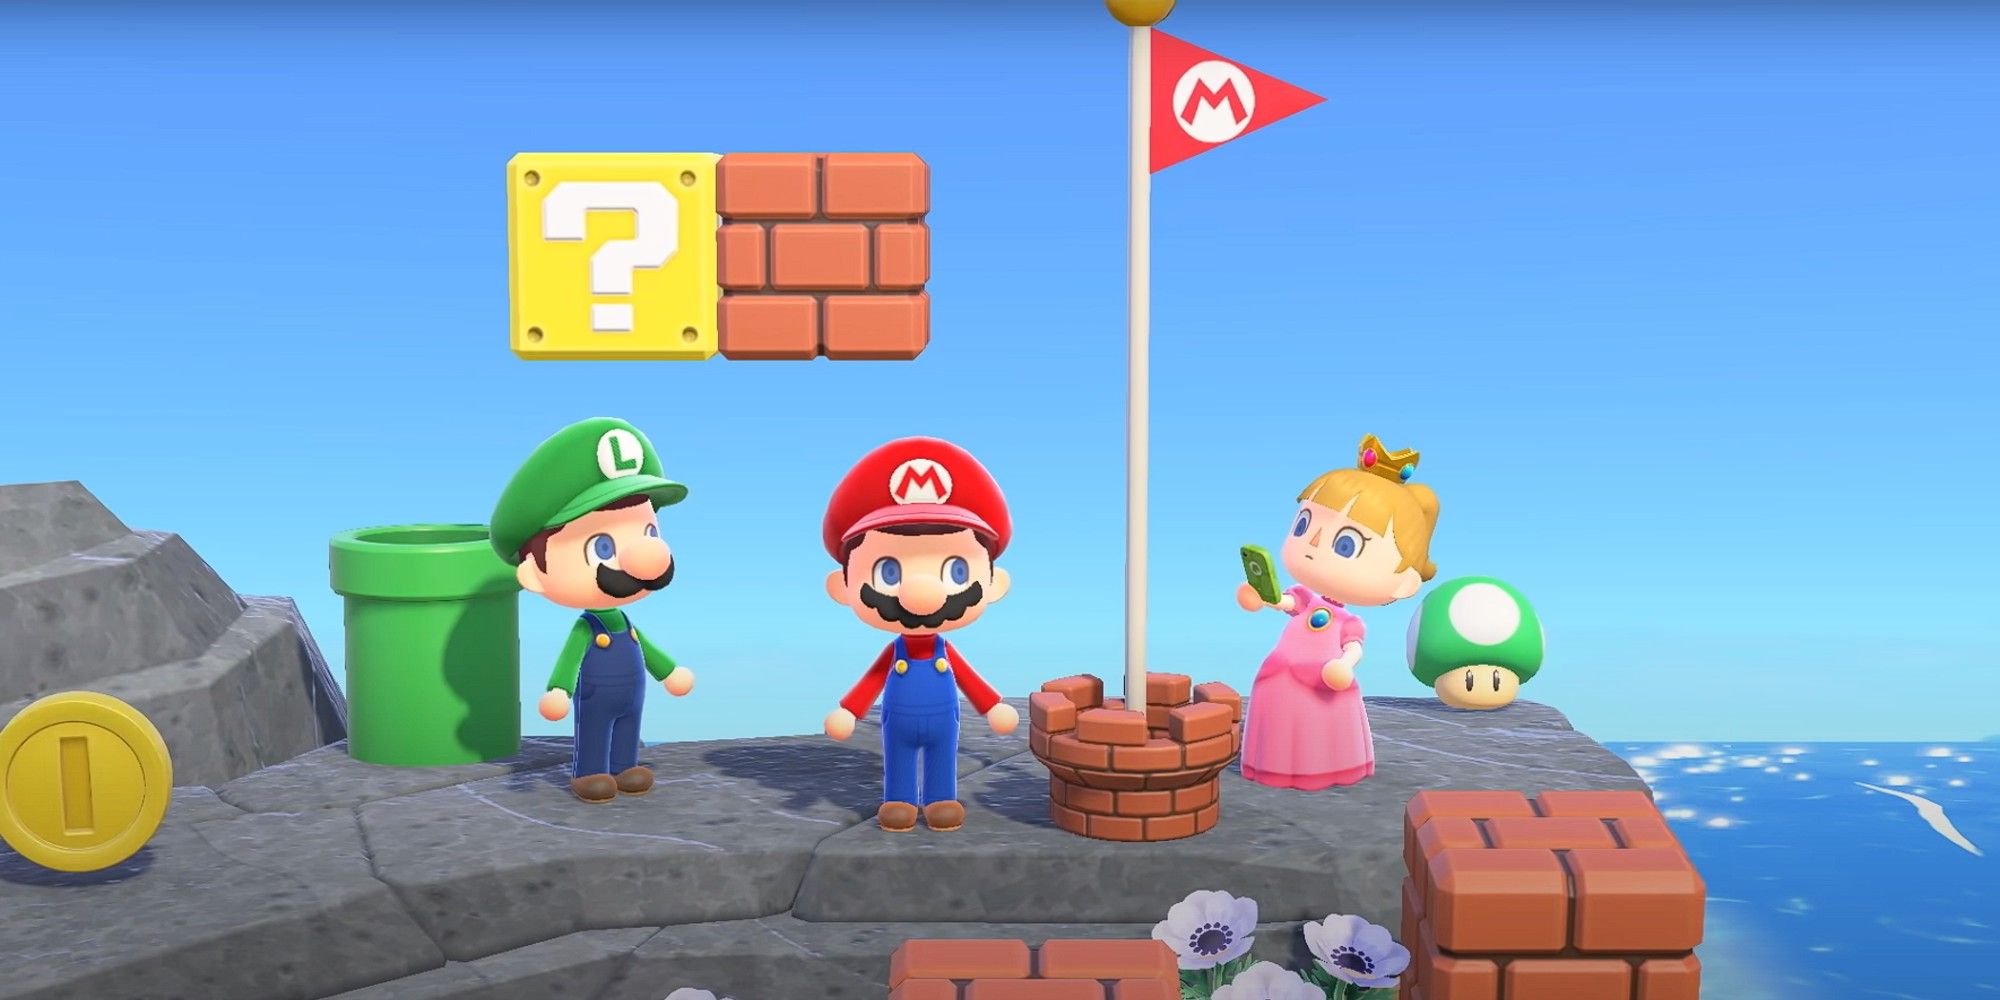 Mario raises the Mario Goal Flag with Luigi and Peach in Animal Crossing: New Horizons